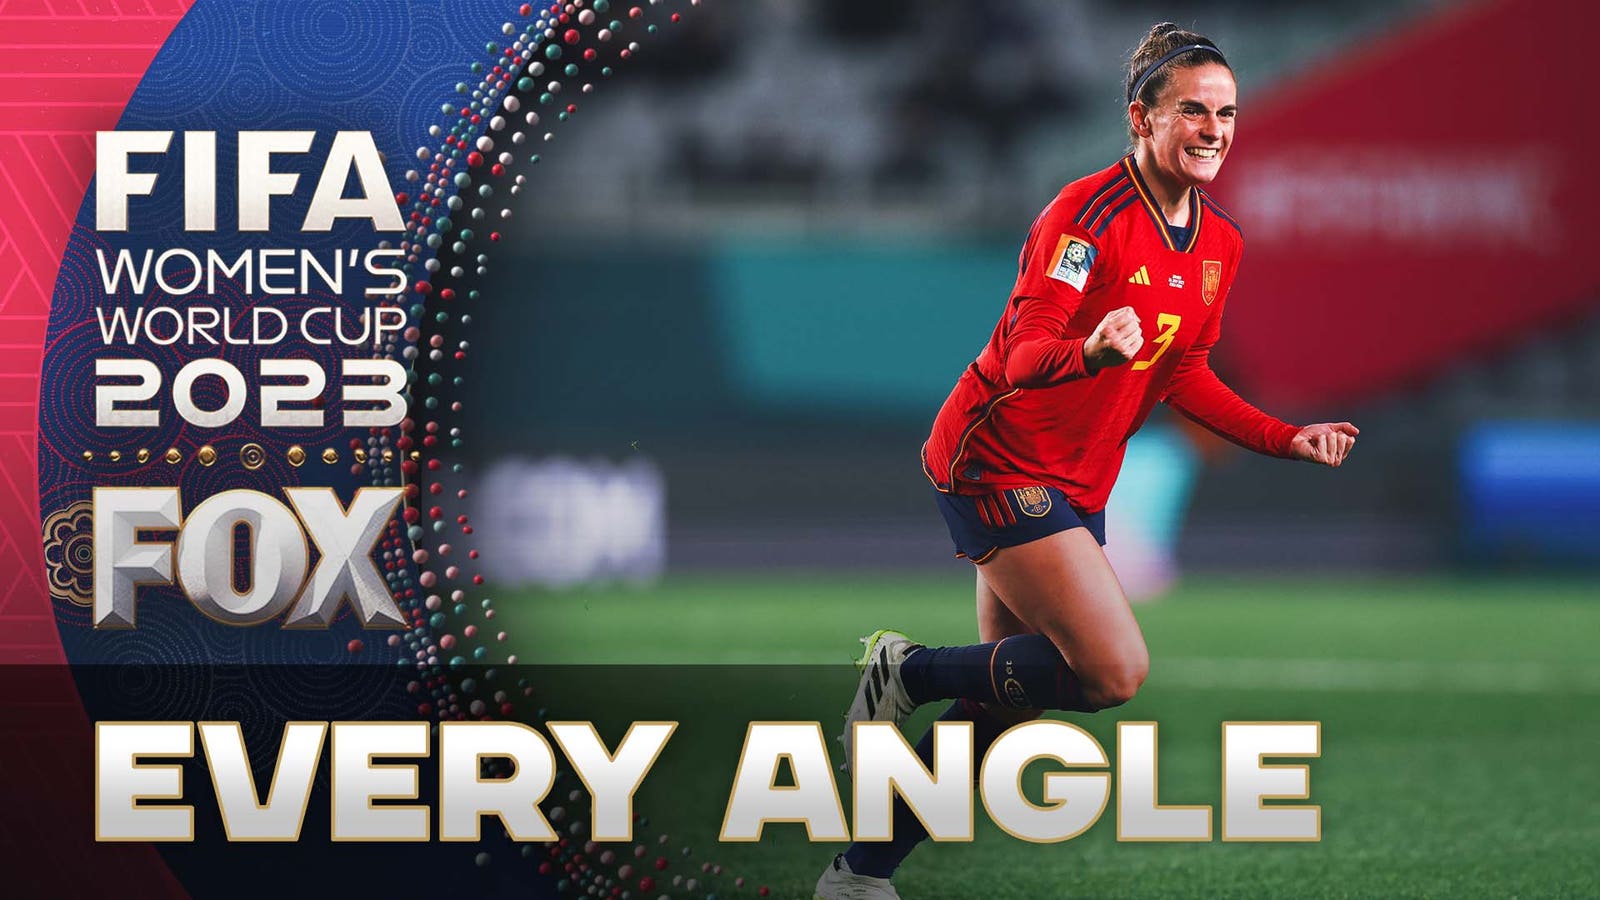 Spain's Teresa Abilleira with a LASER goal vs. Zambia